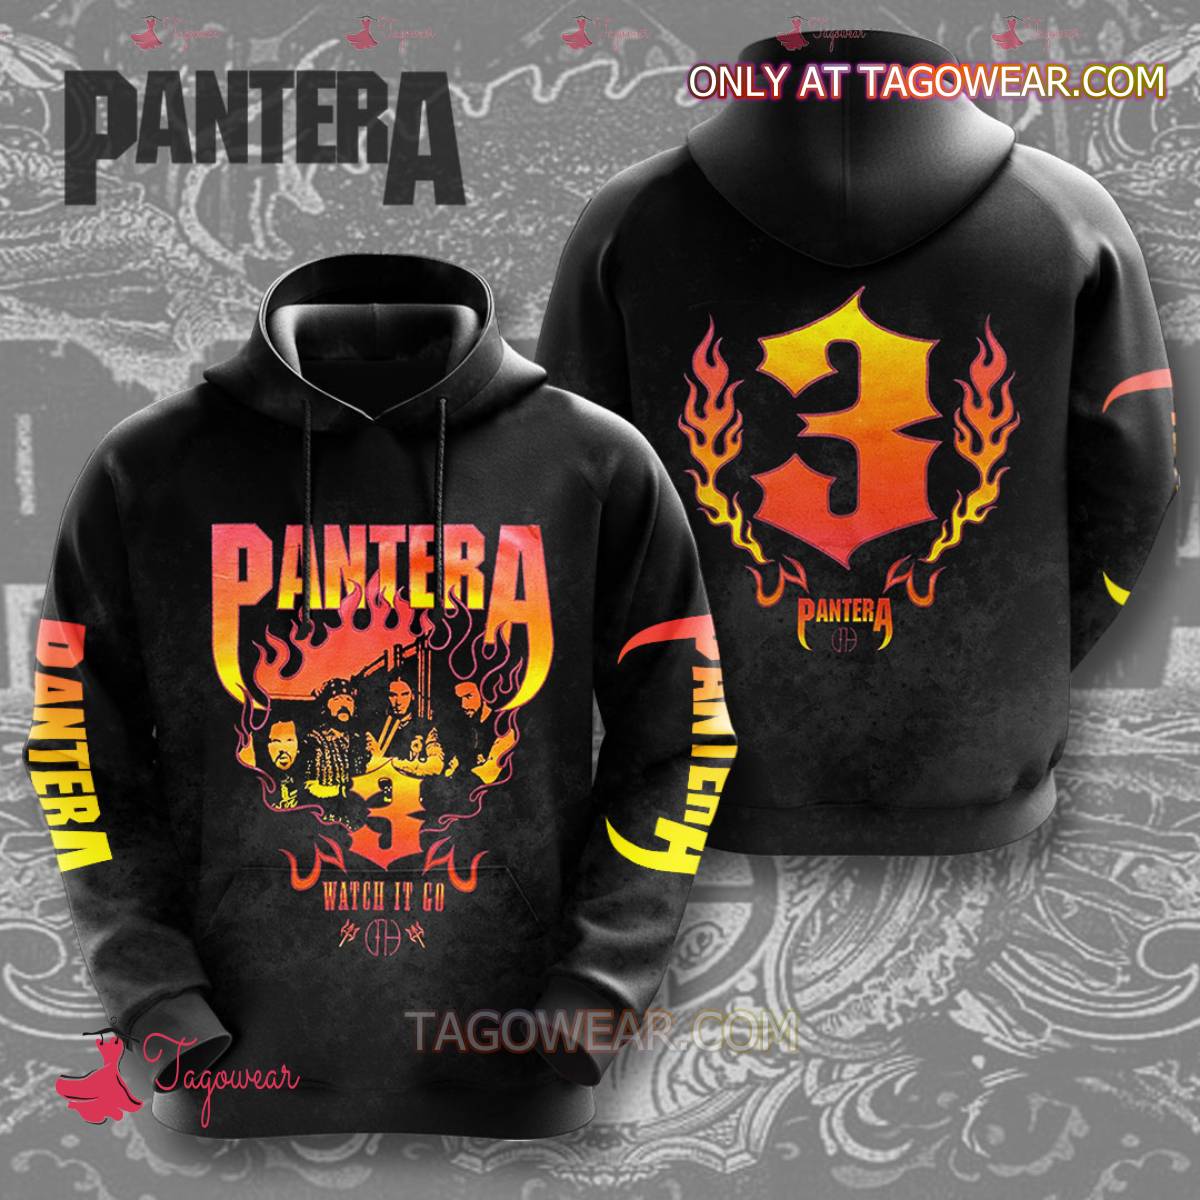 Pantera 3 Watch It Go T-shirt, Hoodie a